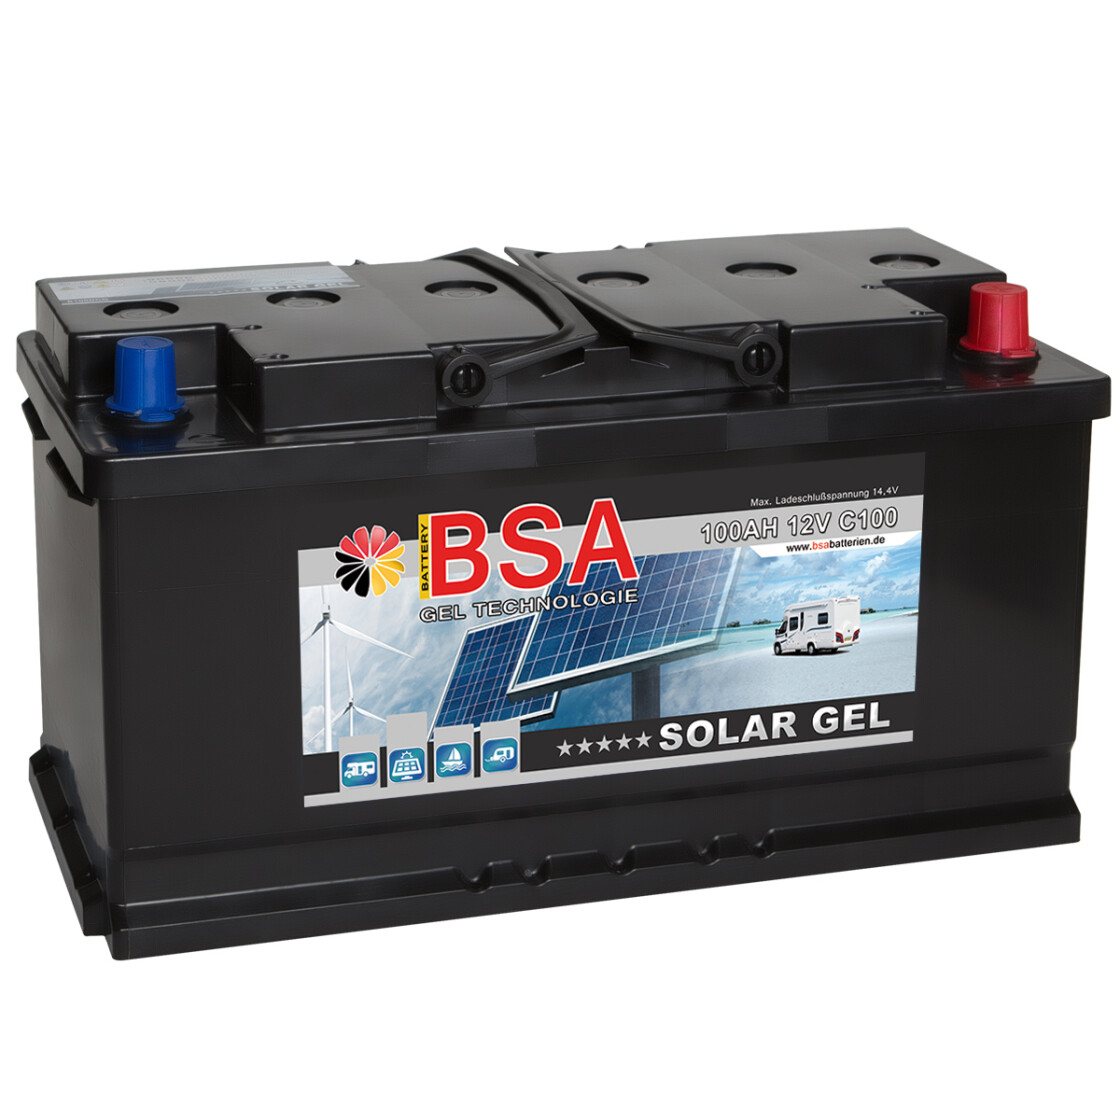 BSA Solarbatterie Gel 100Ah 12V, 178,07 €